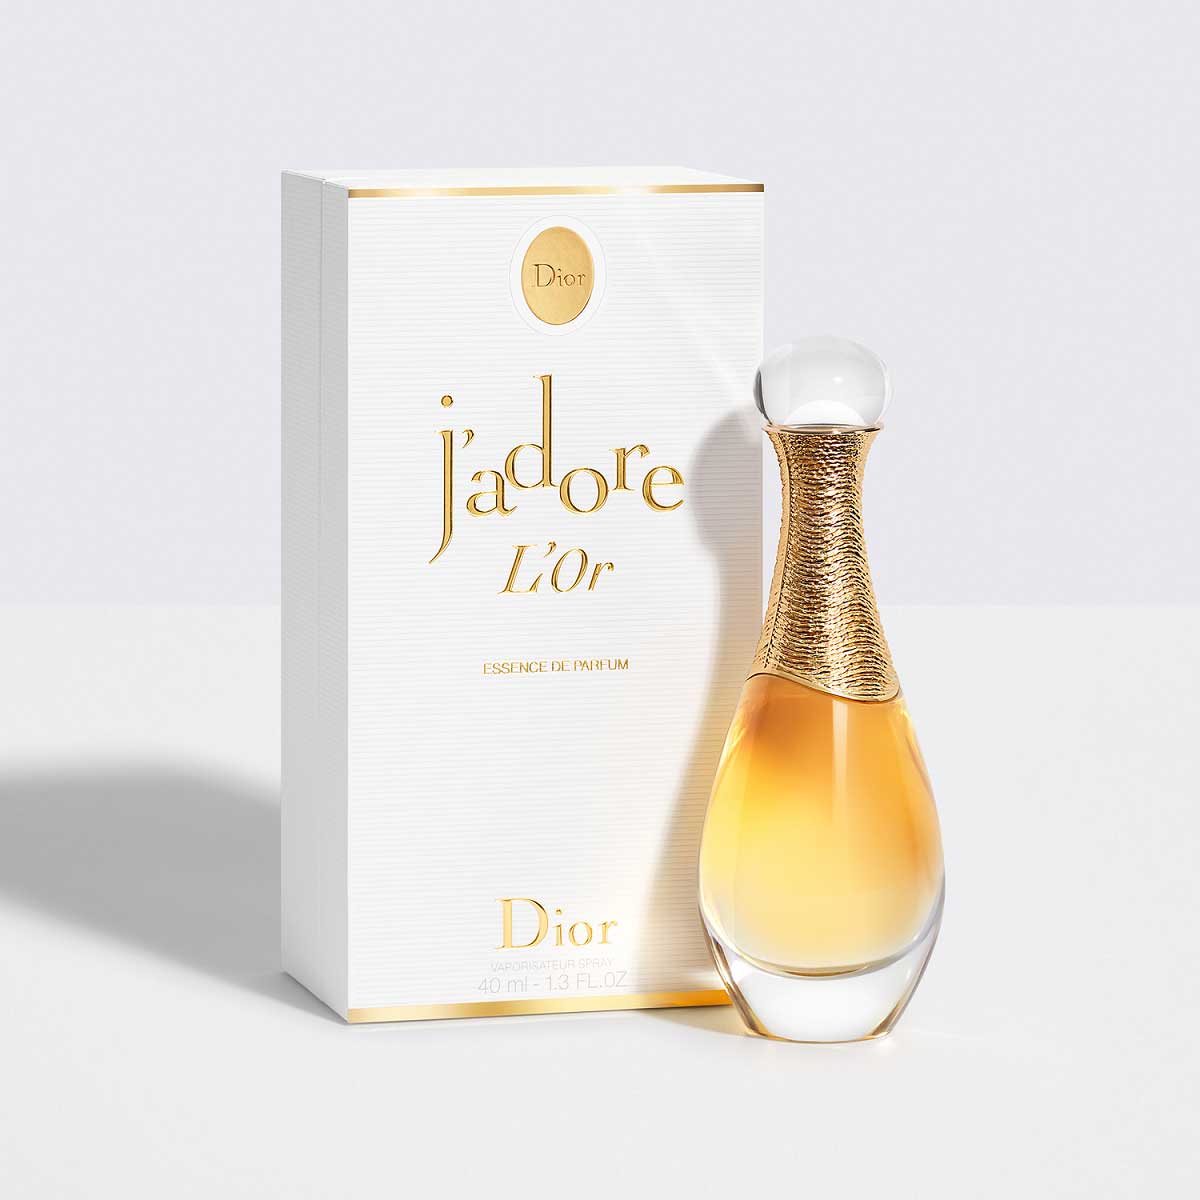 J'adore L'or Essence De Parfum - Escentual's Blog 3C6